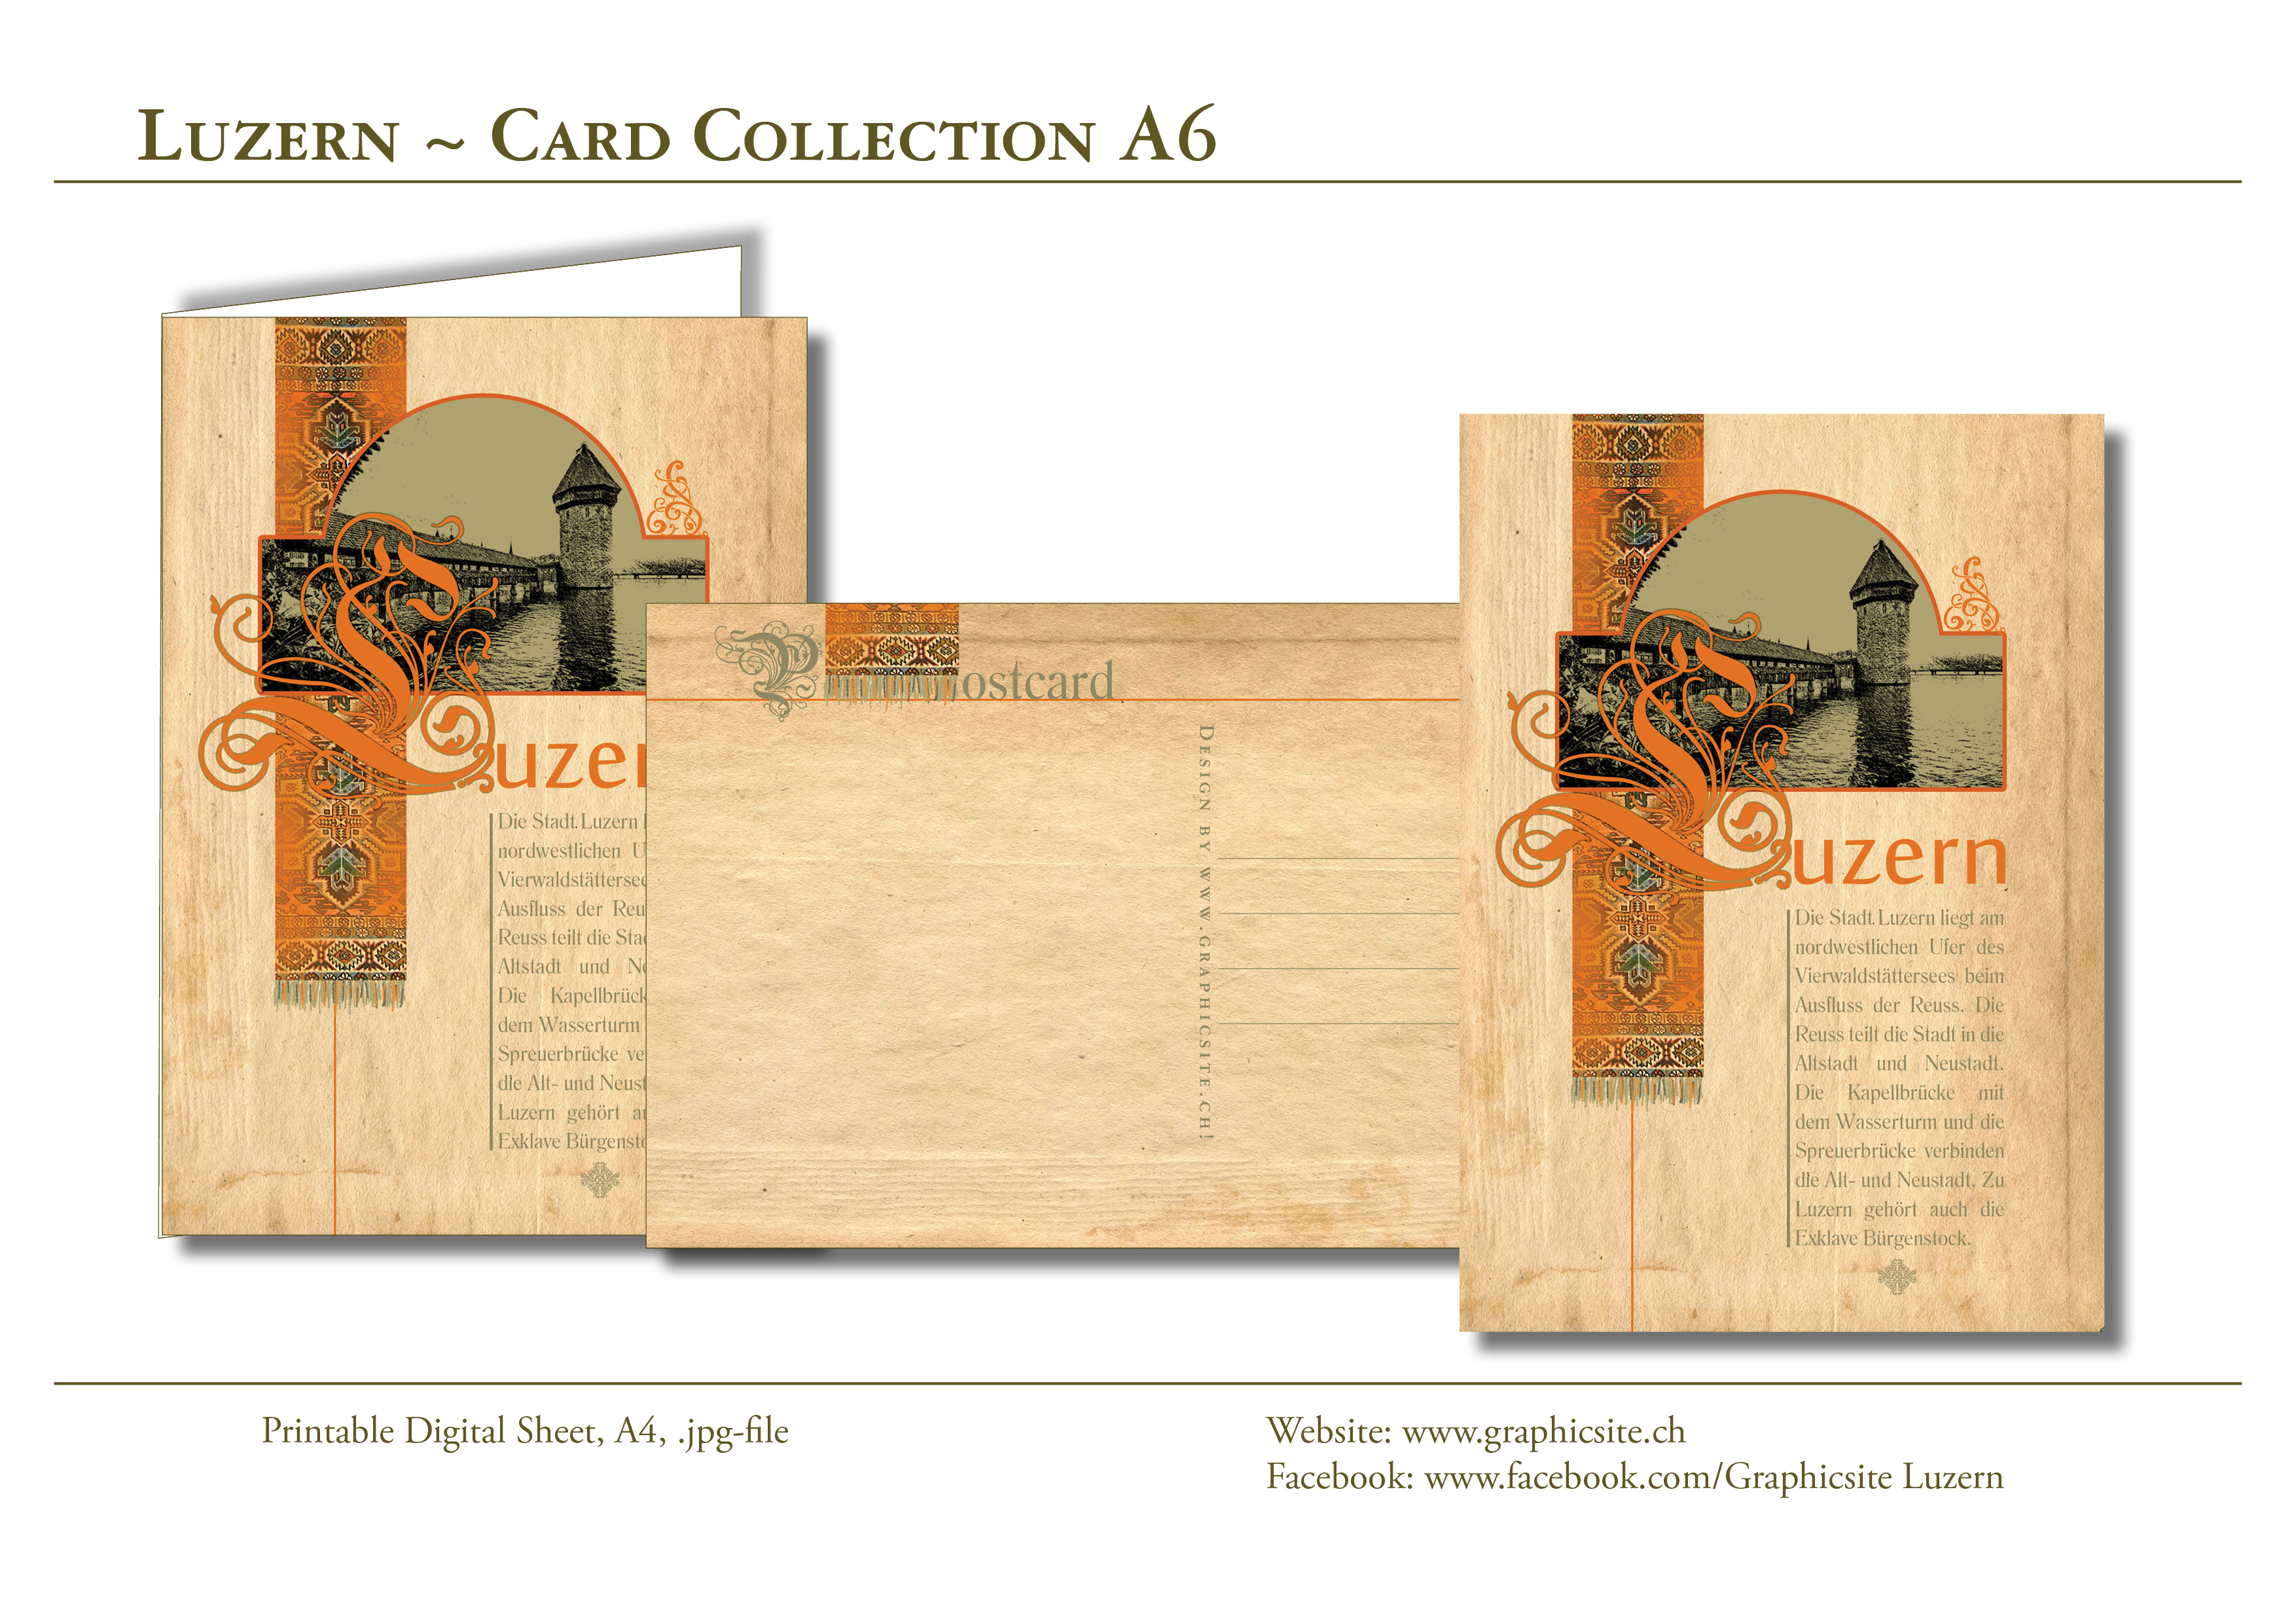 Printable Digital Sheets - Greetingcards, Postcards, Luzern, Vintage, oldPaper, Graphic Design,